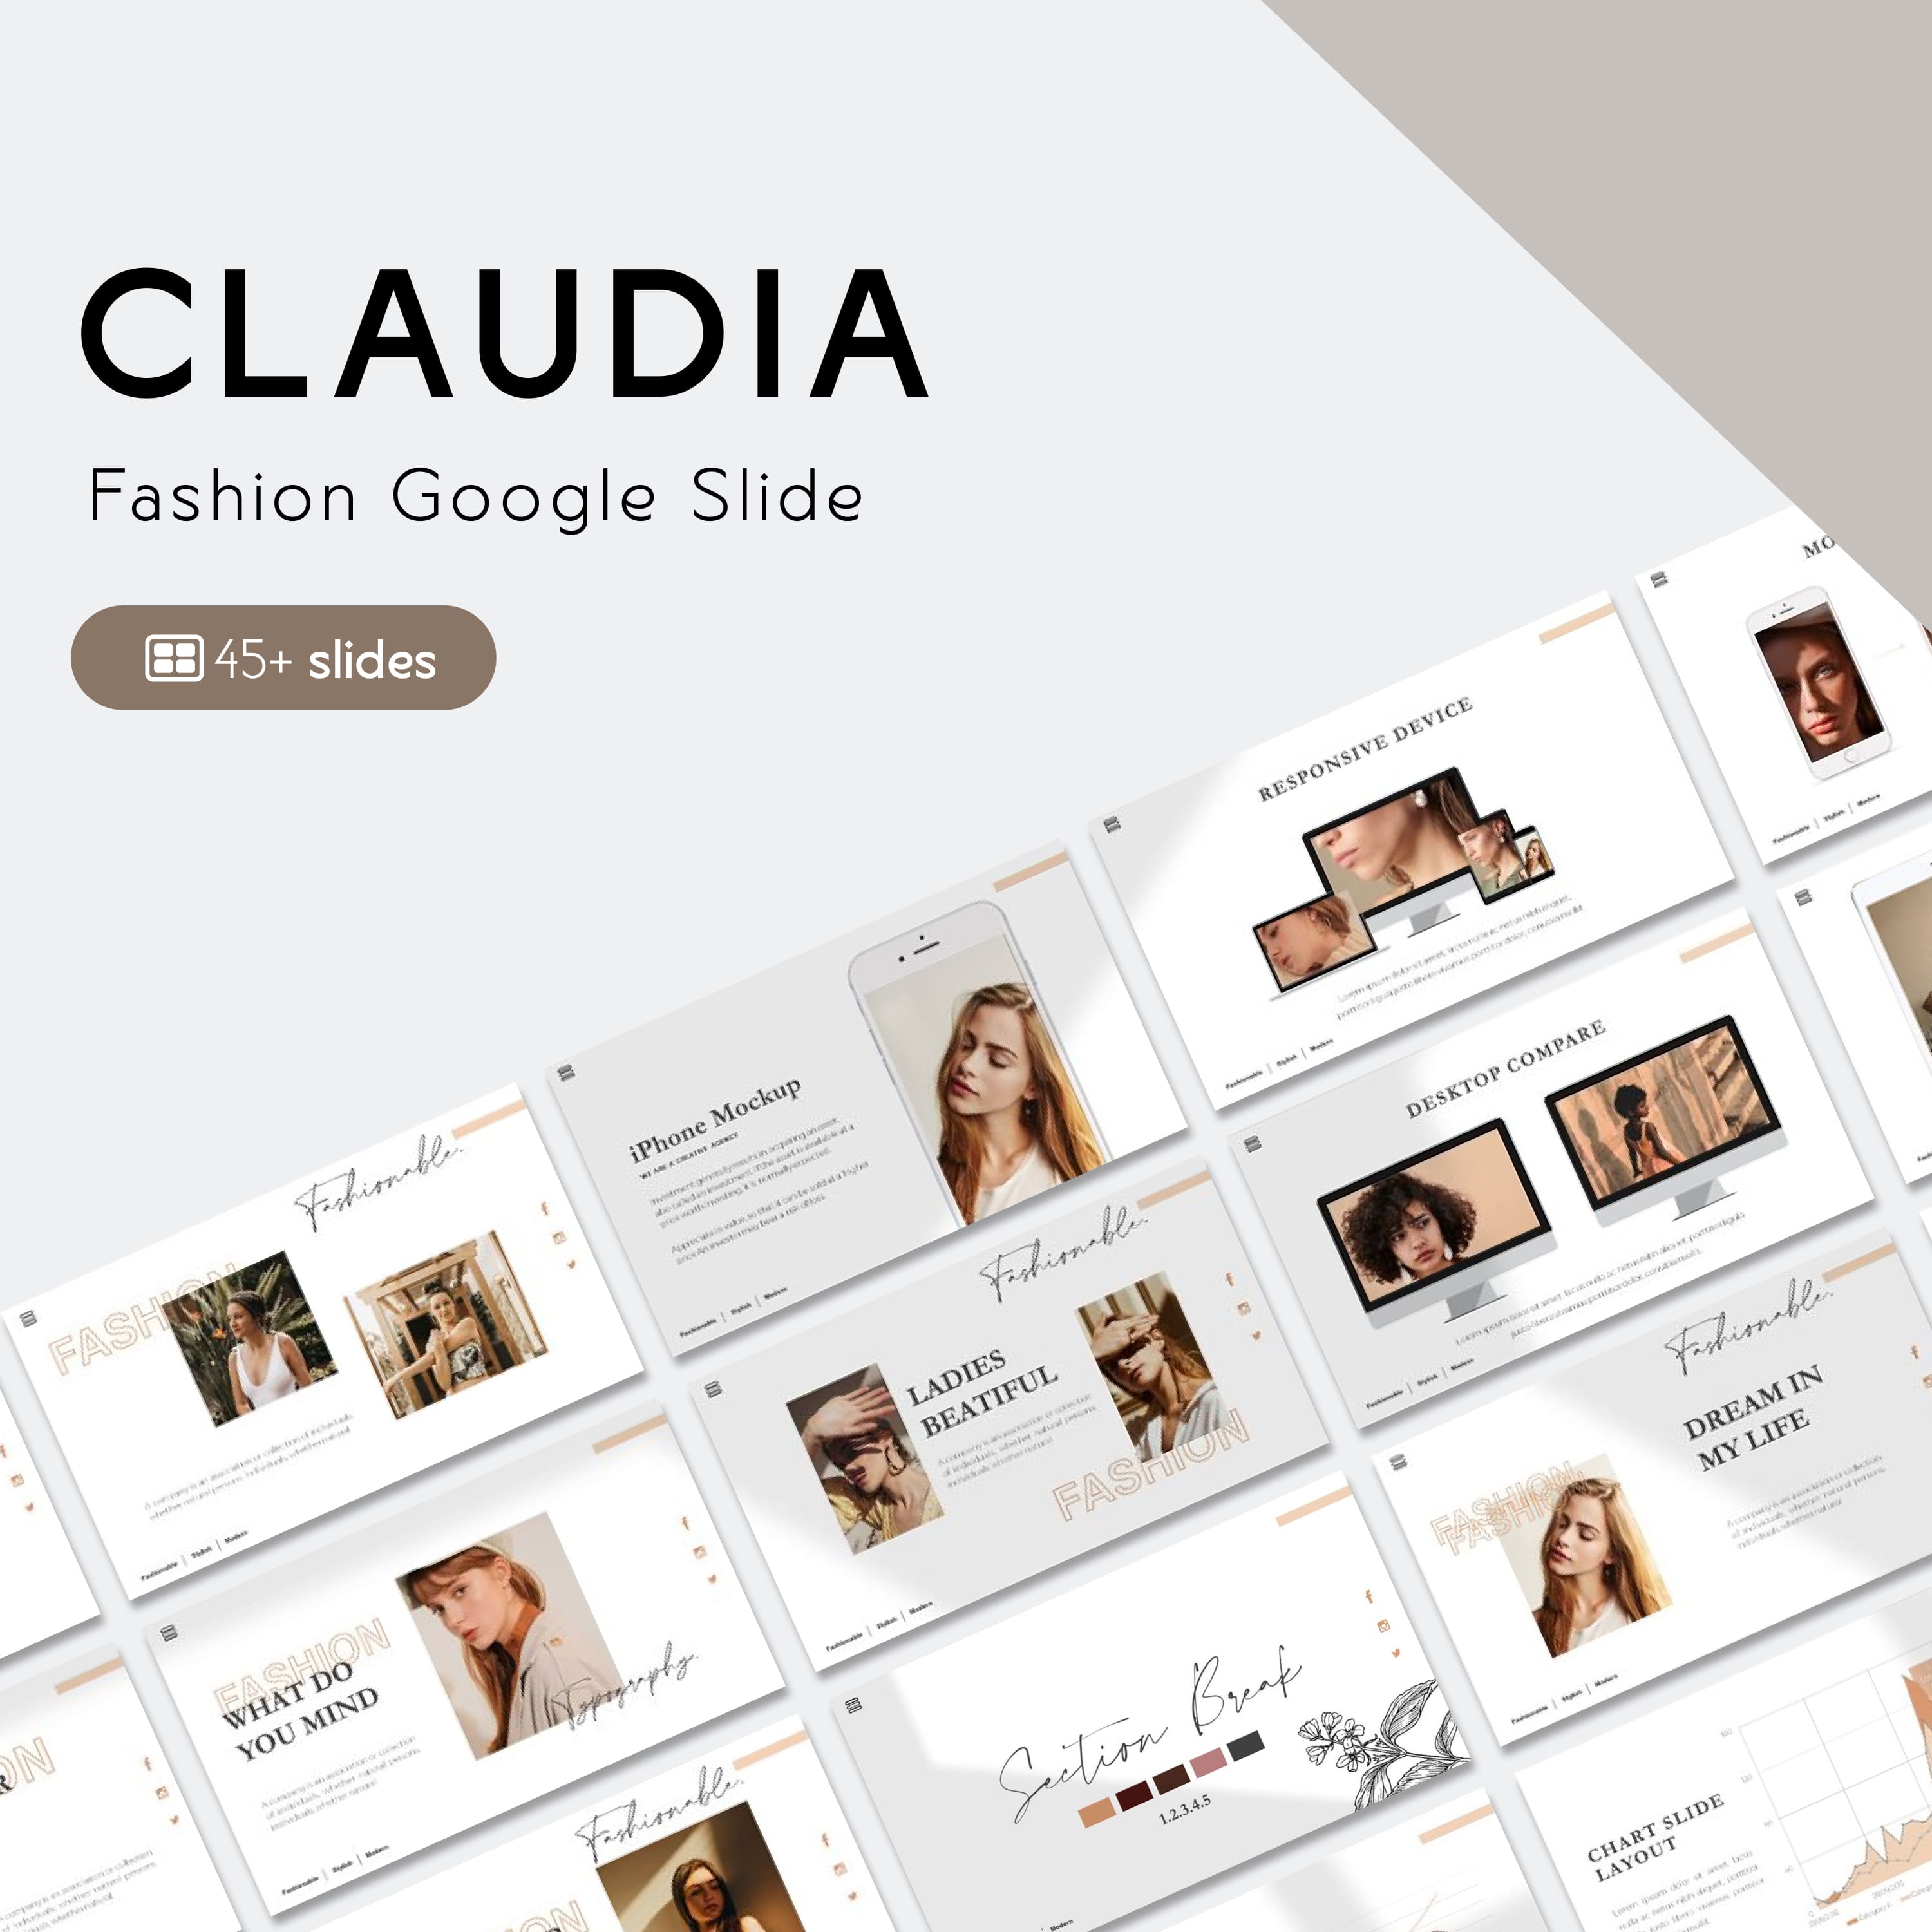 Claudia fashion google slide - main image preview.